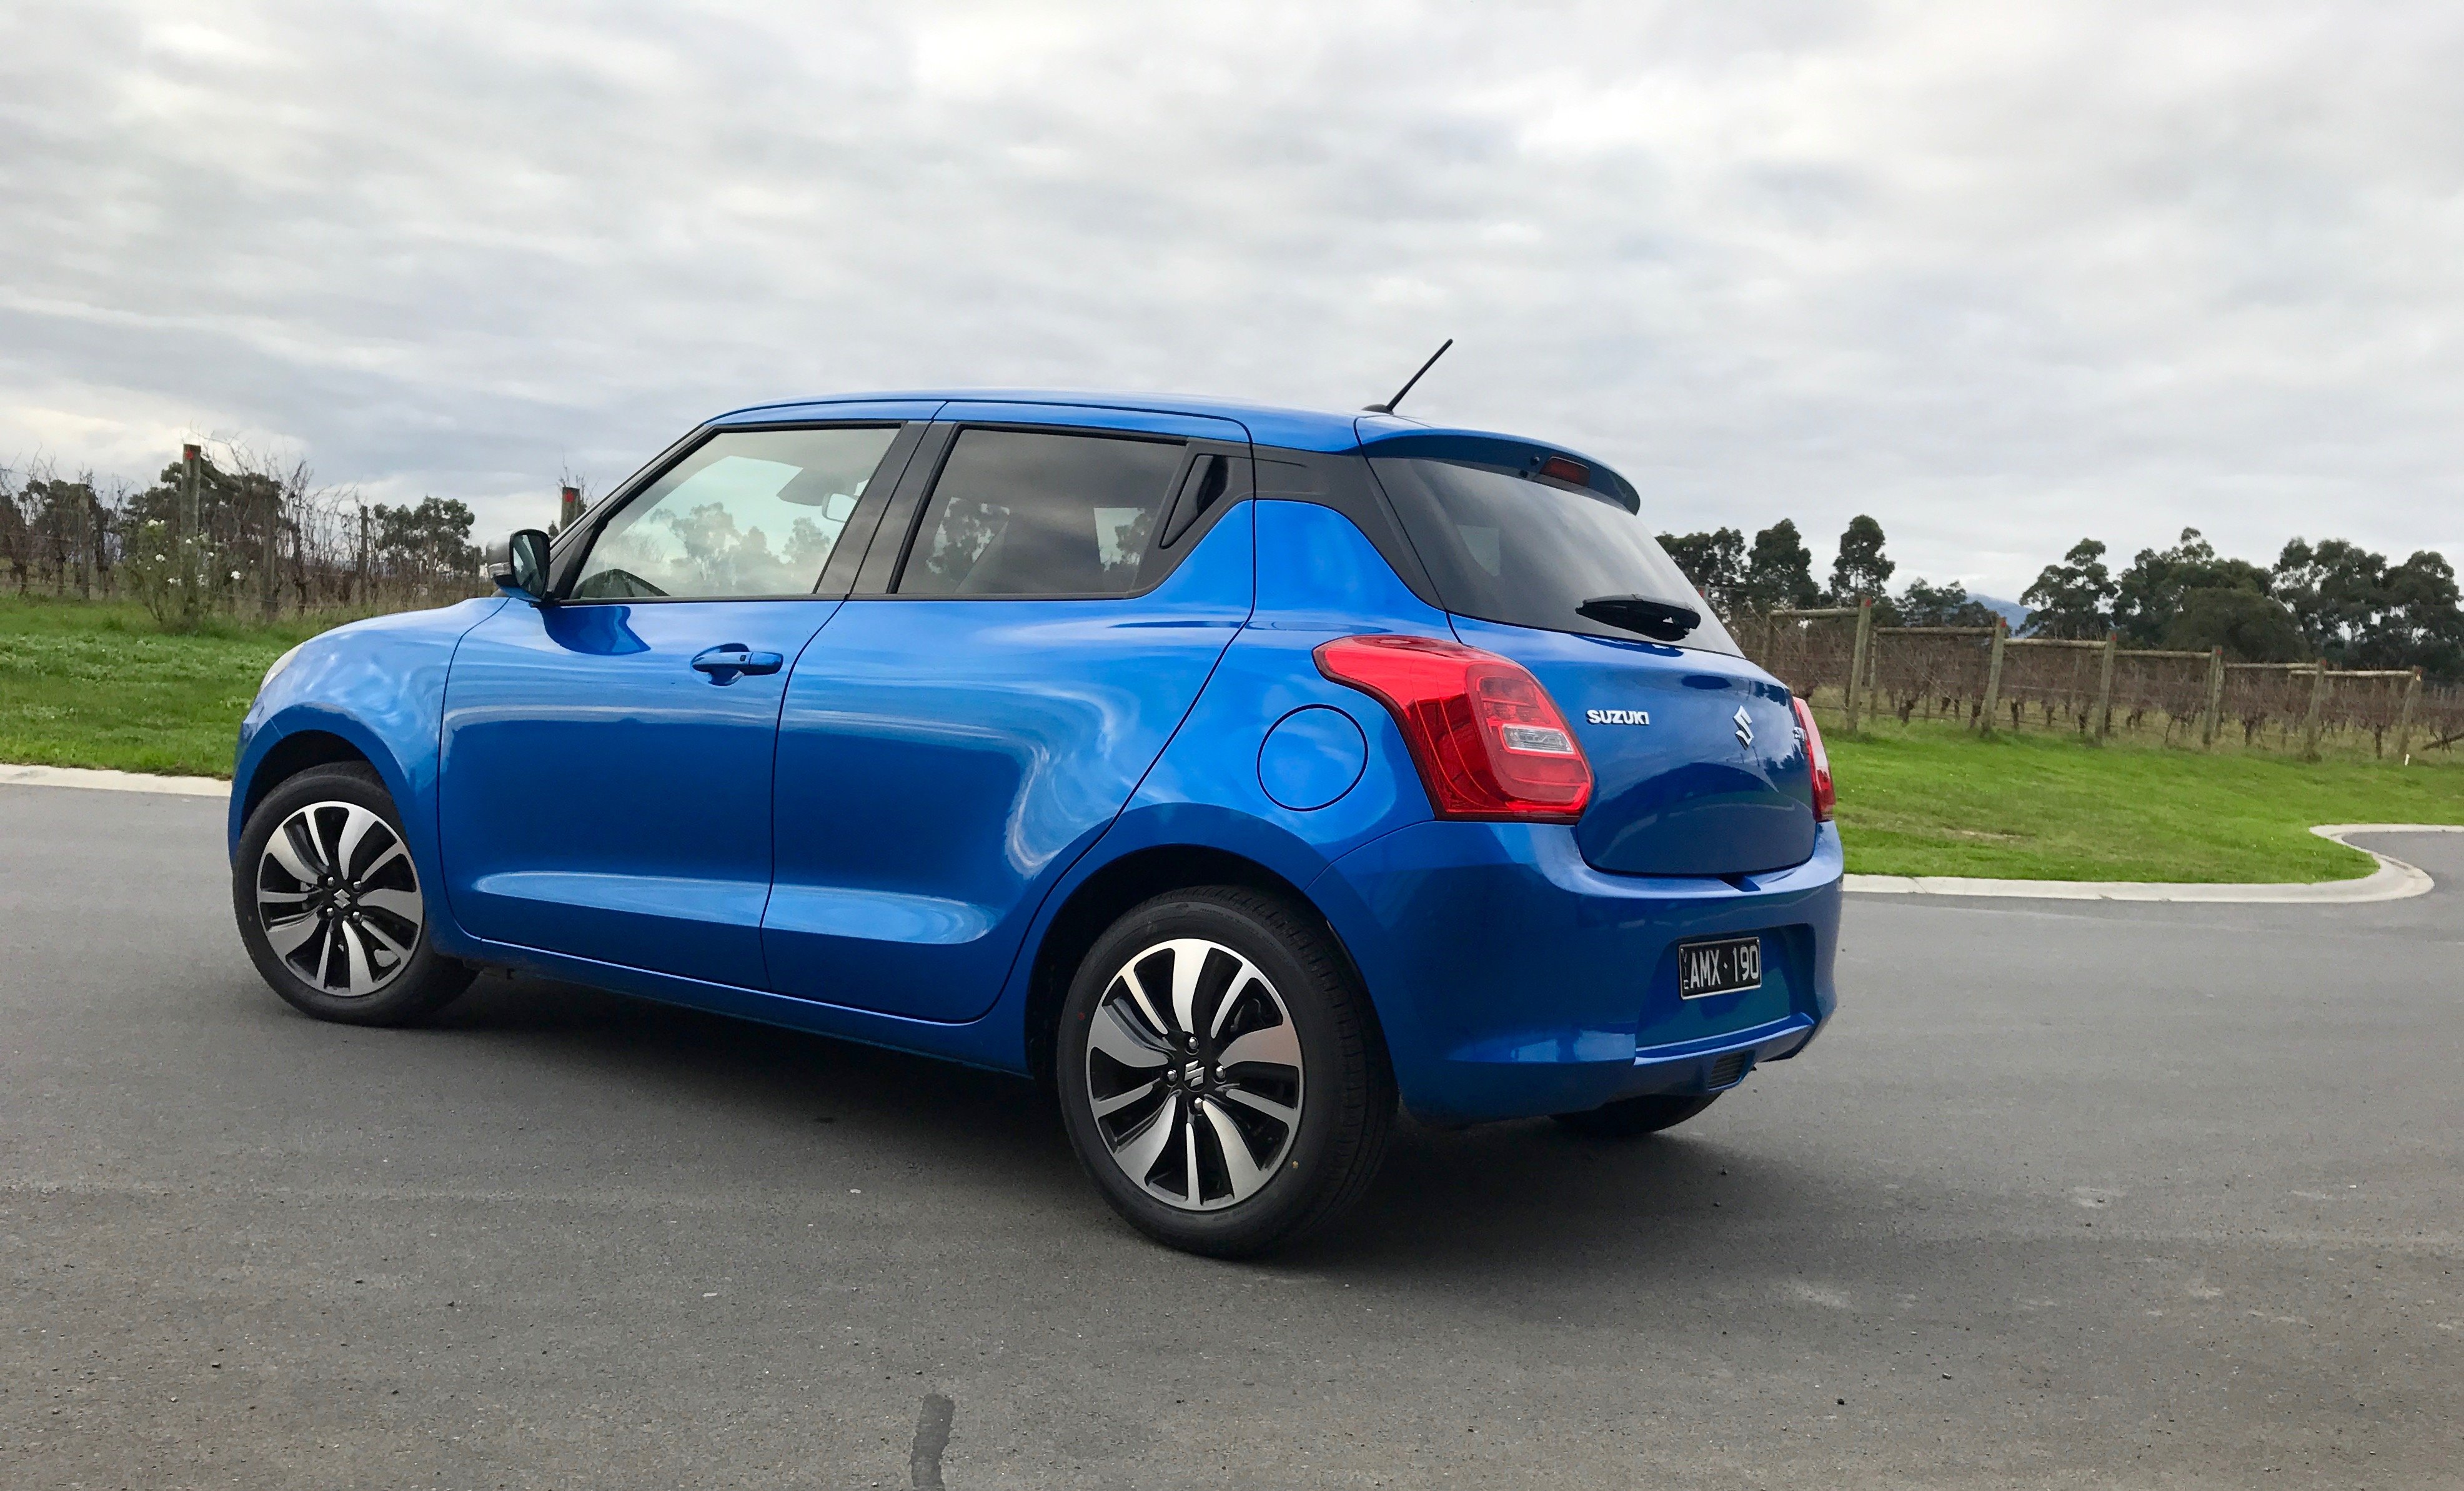 2017 Suzuki Swift review CarAdvice